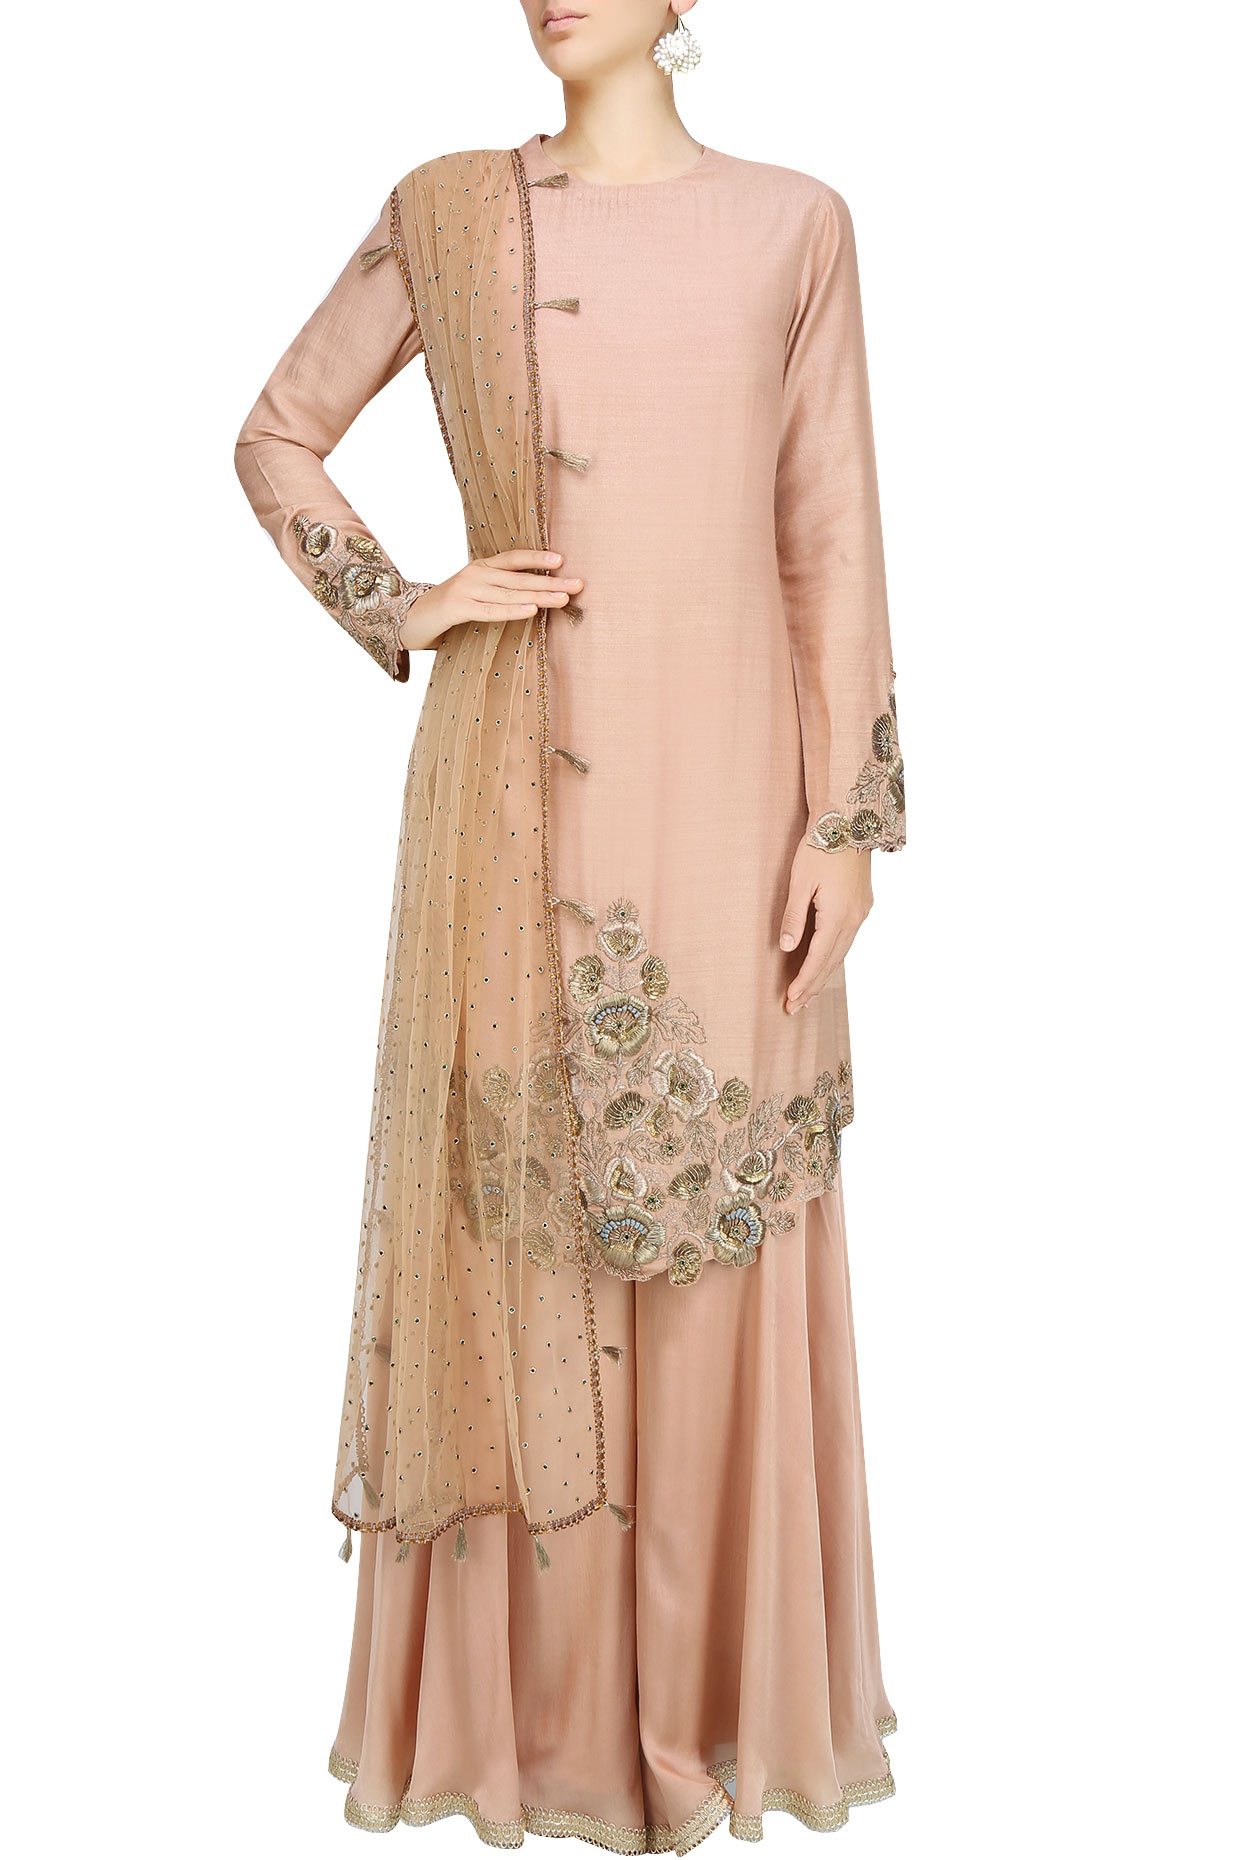 Buy Divya Gupta Dirty pink floral pattern zardozi thread work kurta with  golden layered palazzo pants set at Redfynd